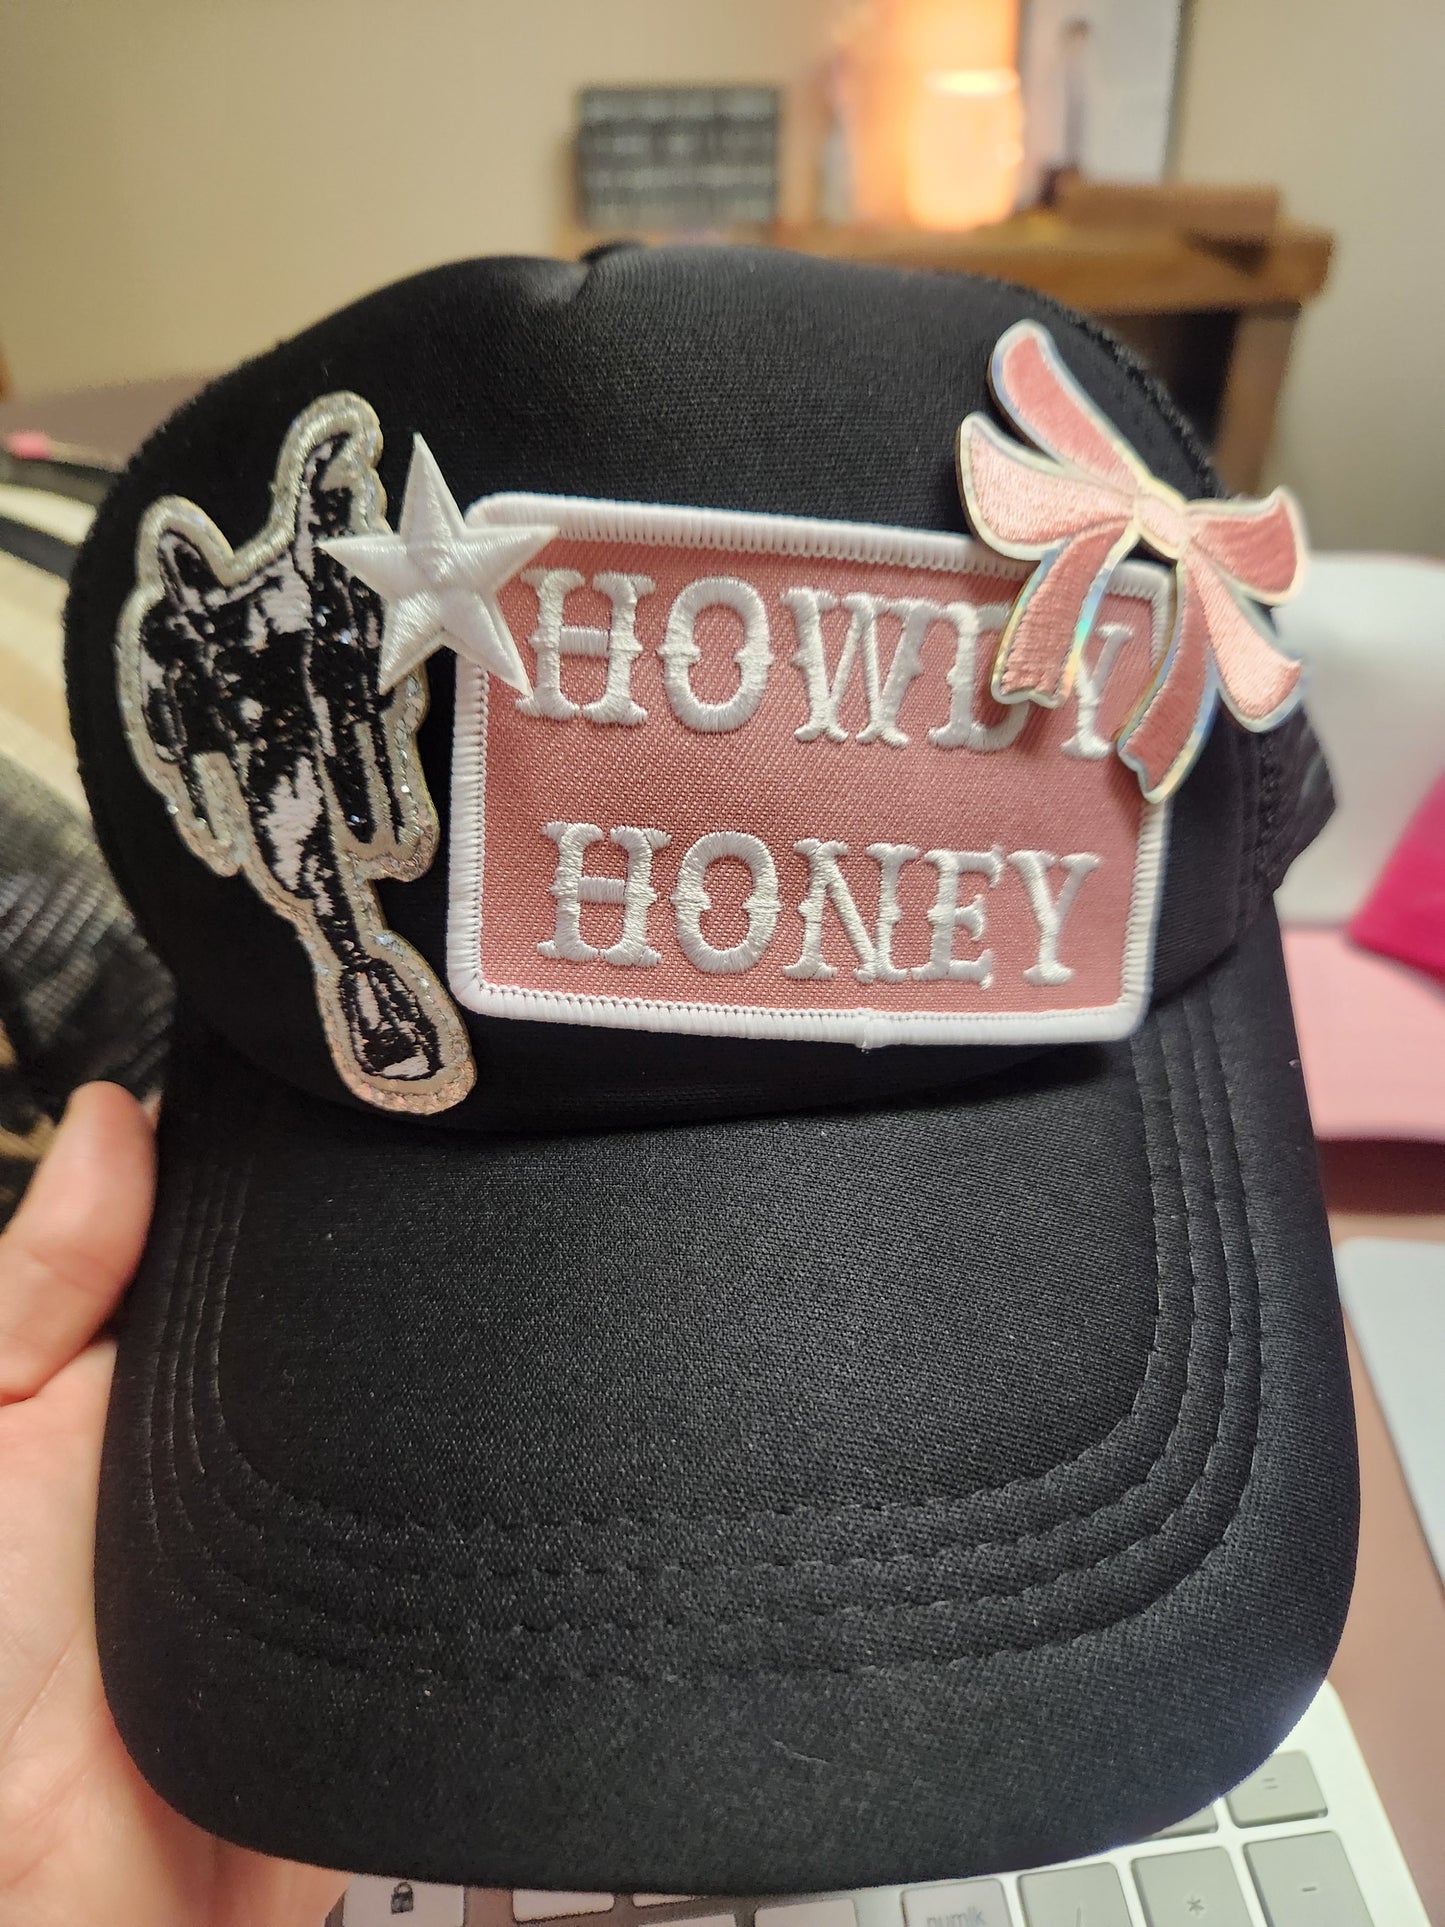 Howdy Honey Iron-On PATCH